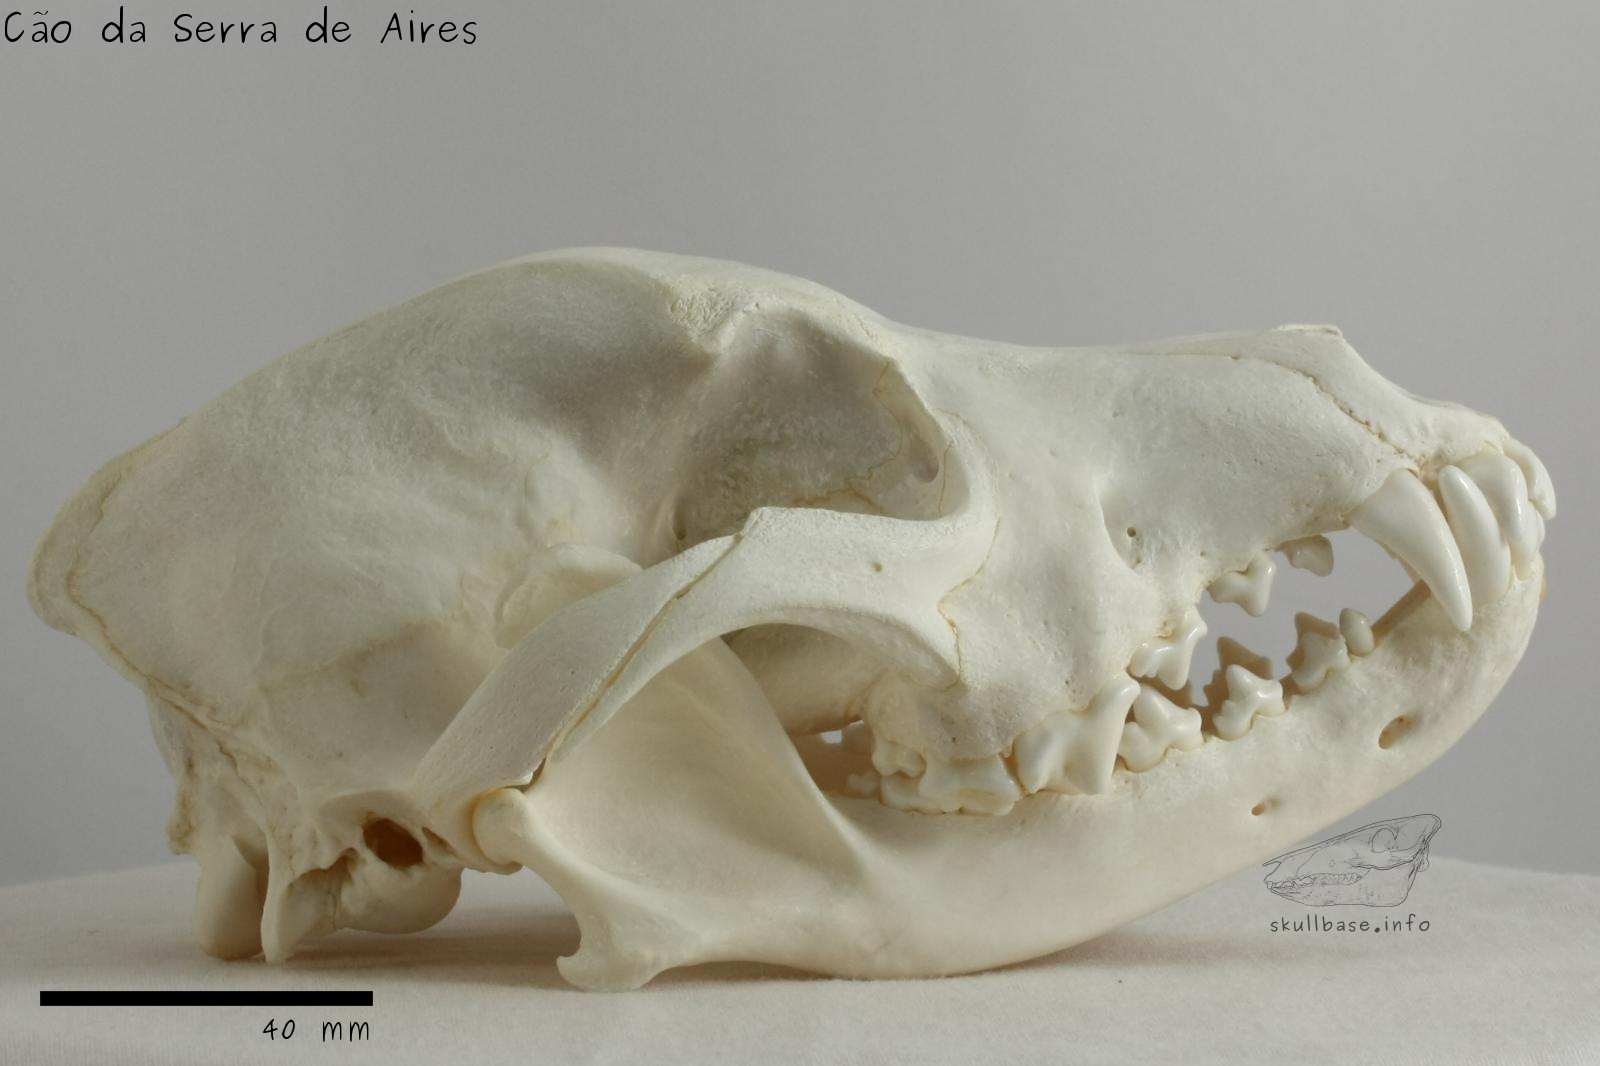 Cão da Serra de Aires (Canis lupus familiaris) skull lateral view